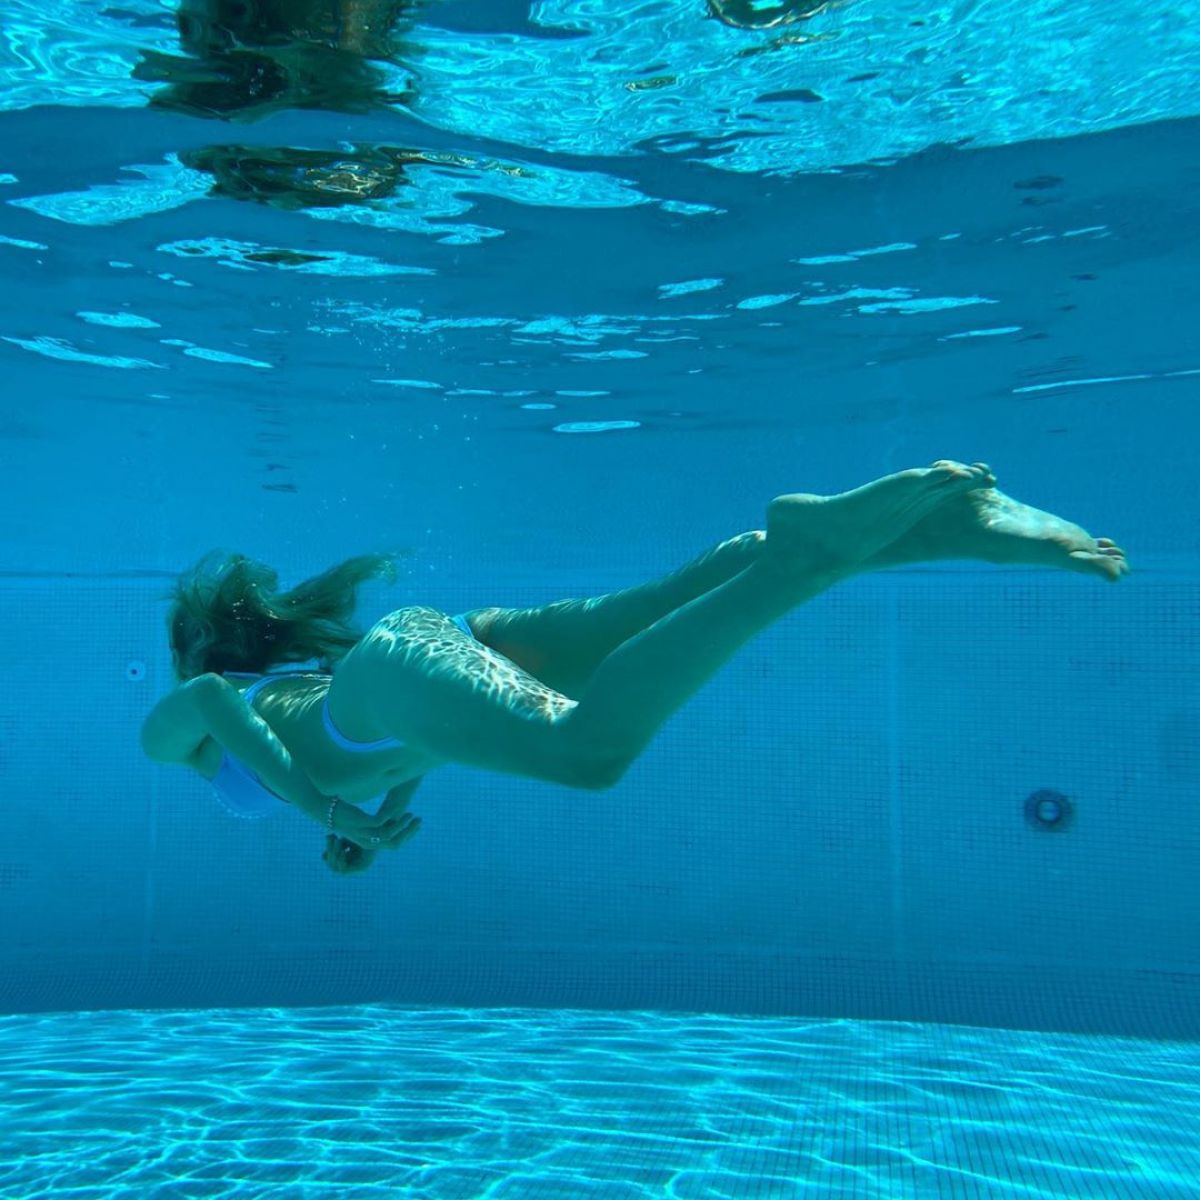 NICOLA PELTZ in Bikini at a Pool - Instagram Photos 10/14/2020.